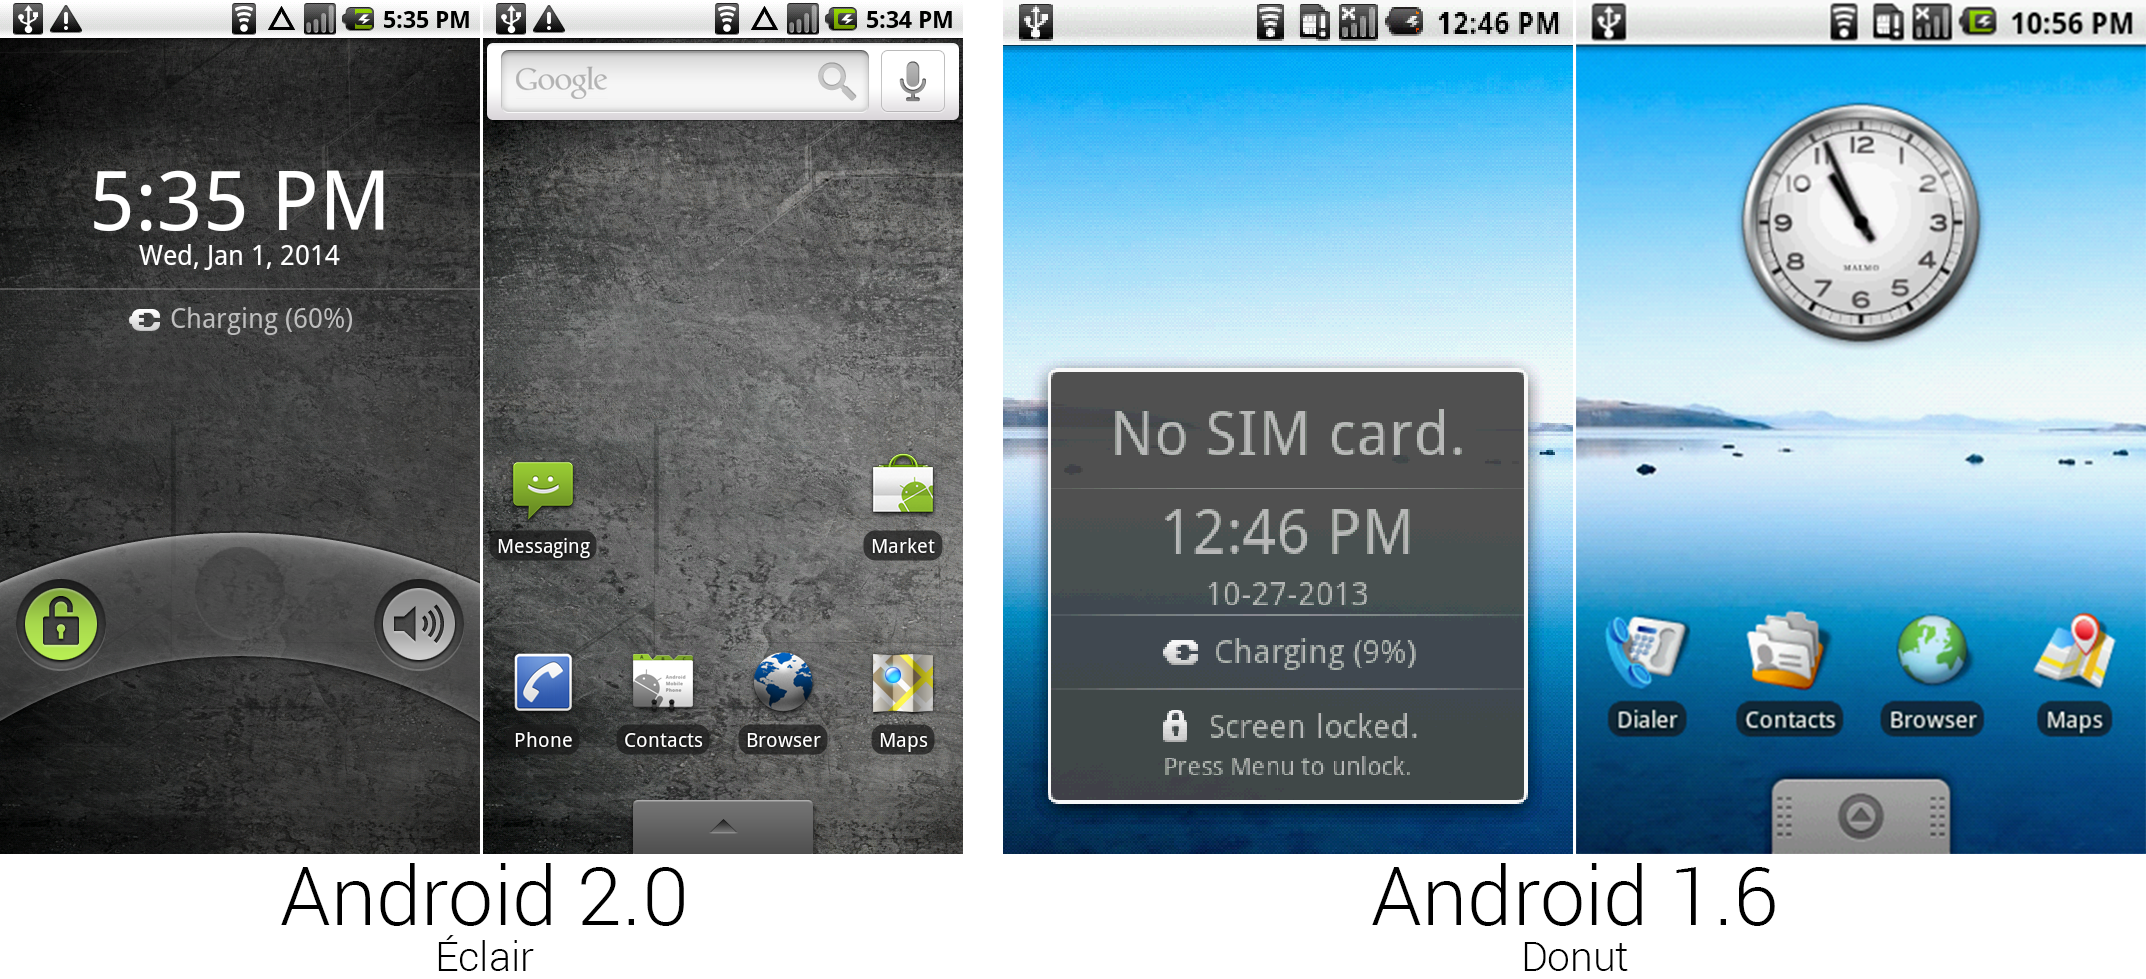 V 2.0 apk. Интерфейс андроид 2. Android 2.0. Интерфейс андроид 1. Андроид 1.0 Интерфейс.